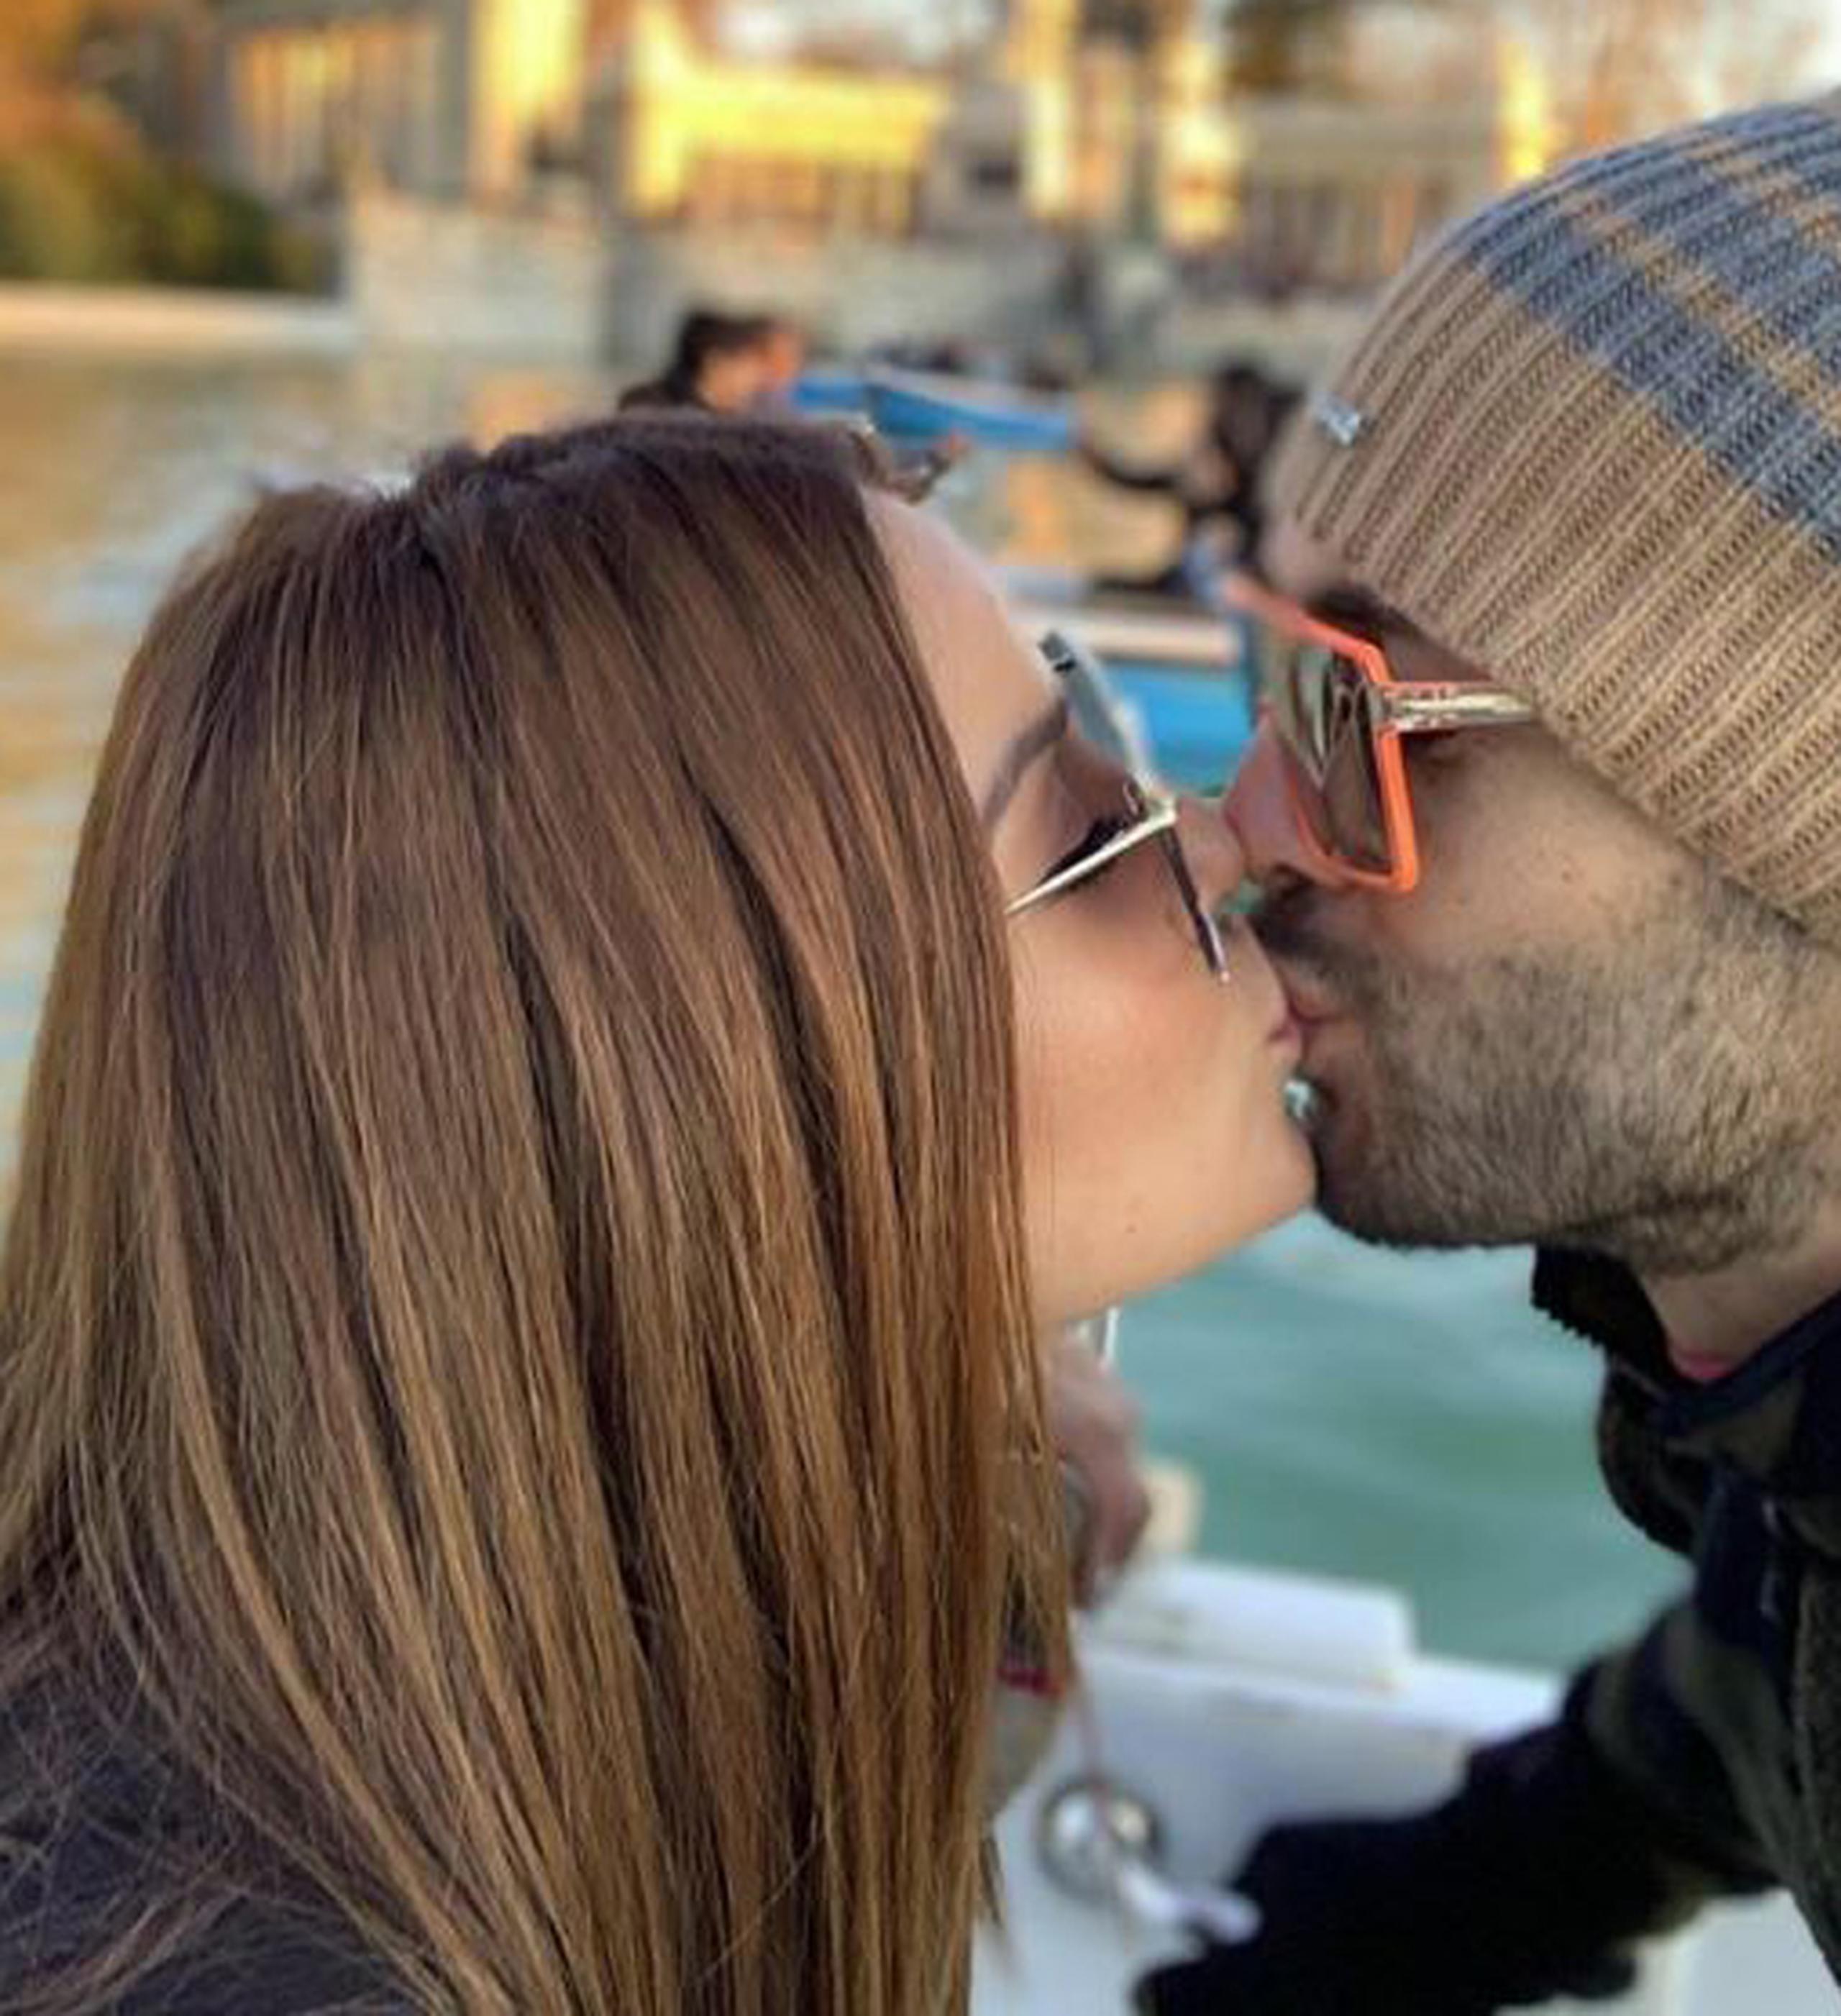 Gredmarie Colón y Fredito Mathews besándose en España. (Instagram / @fredito_mathews)